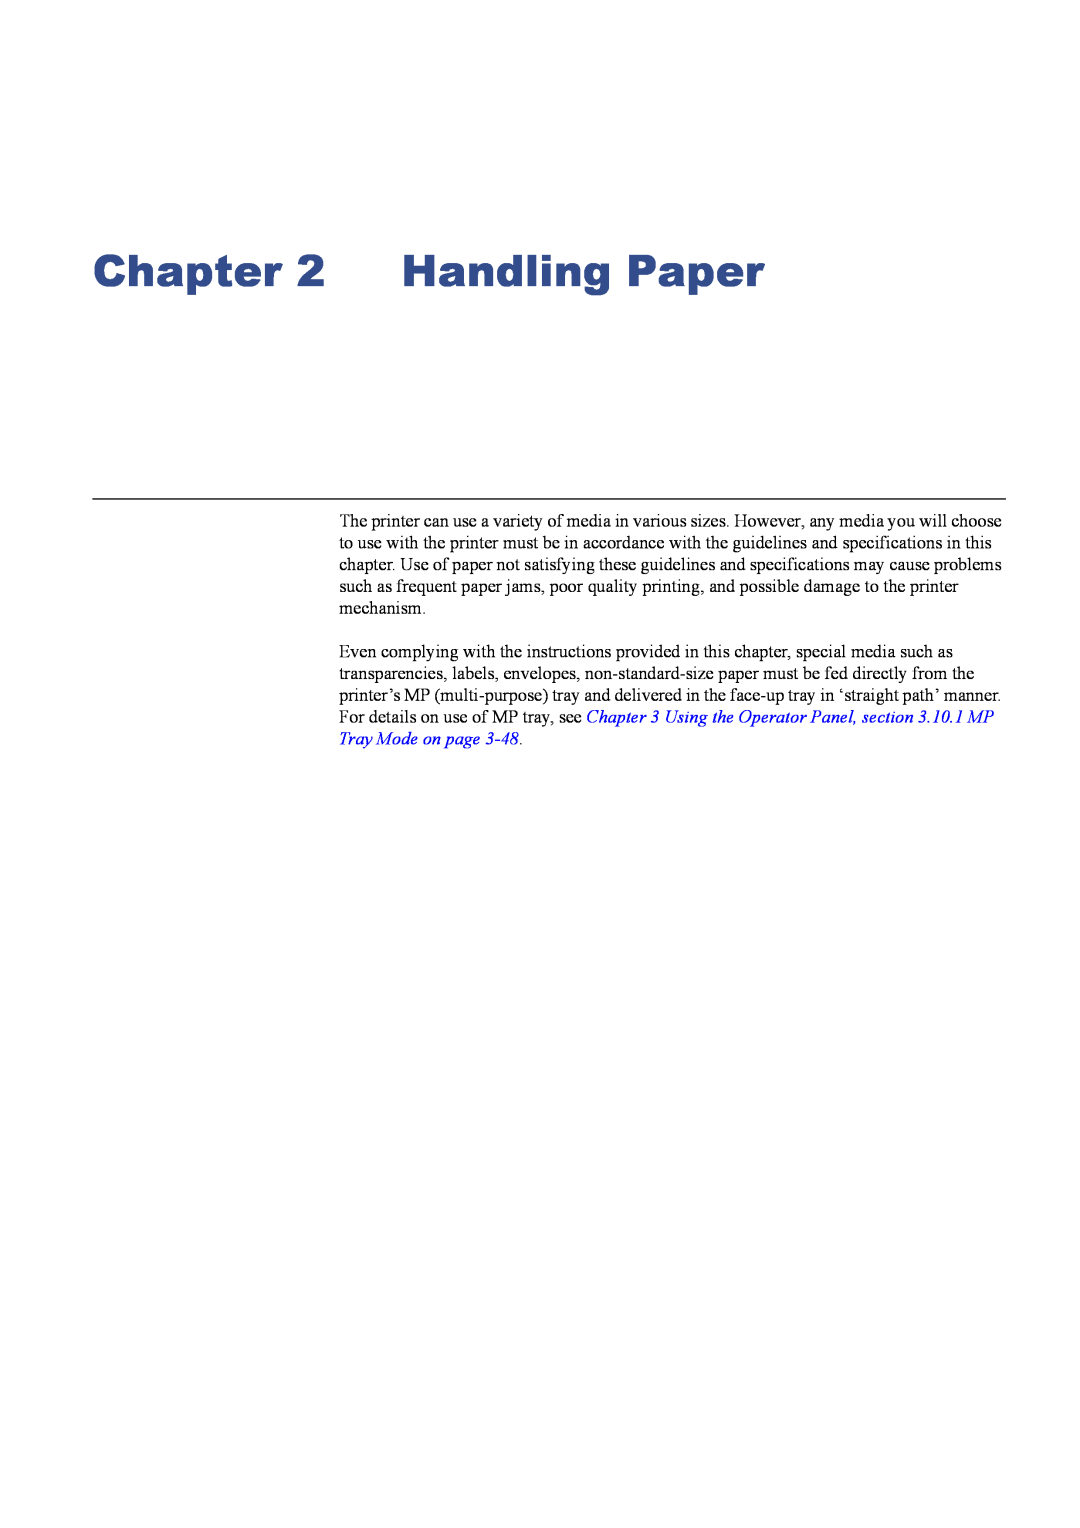 Kyocera C8026N manual Handling Paper 